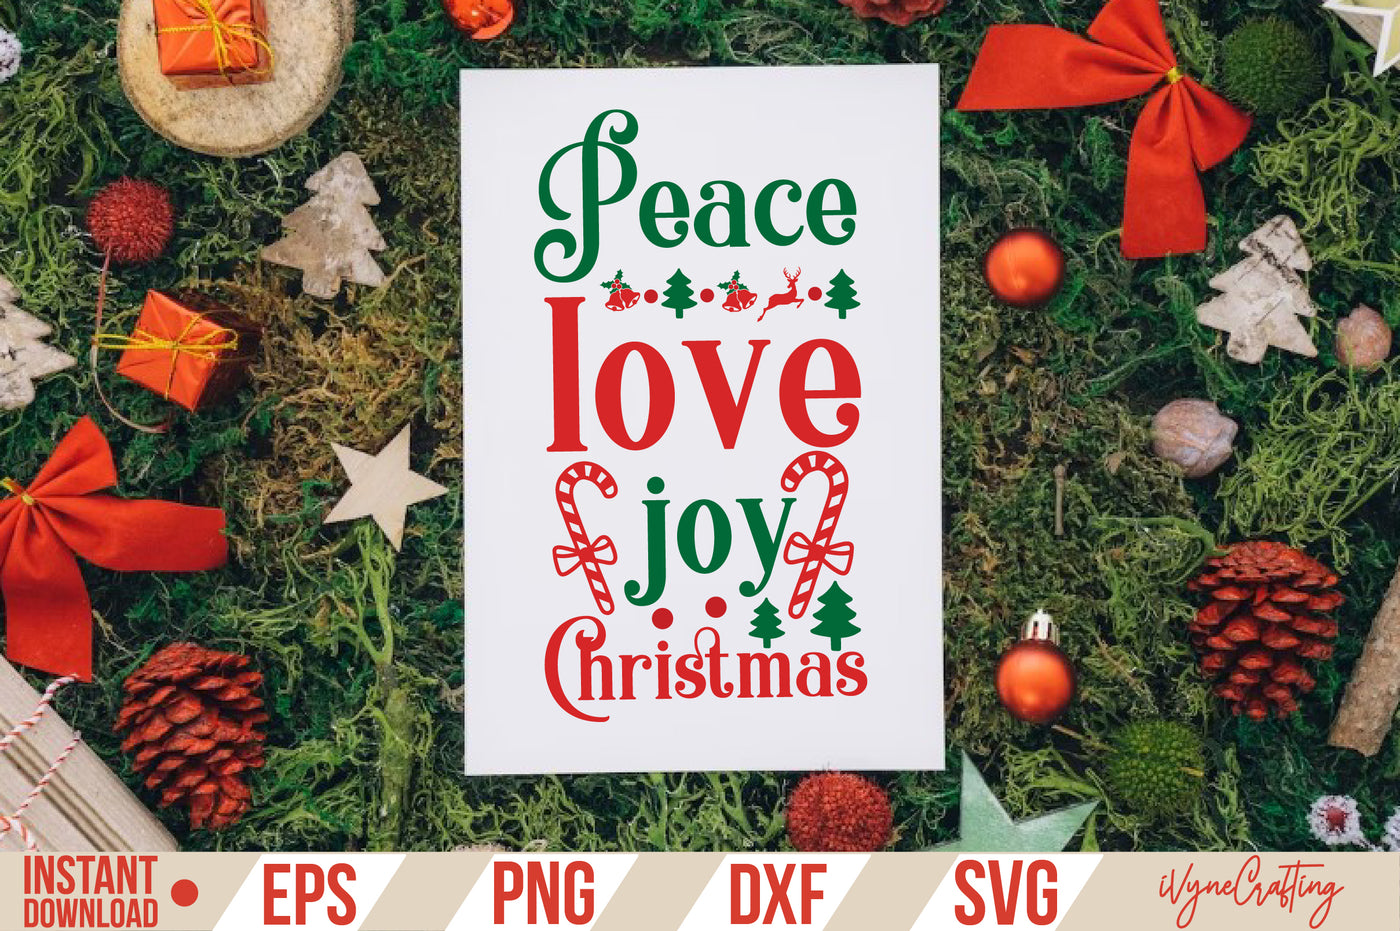 Peace, love, joy, Christmas SVG Cut File